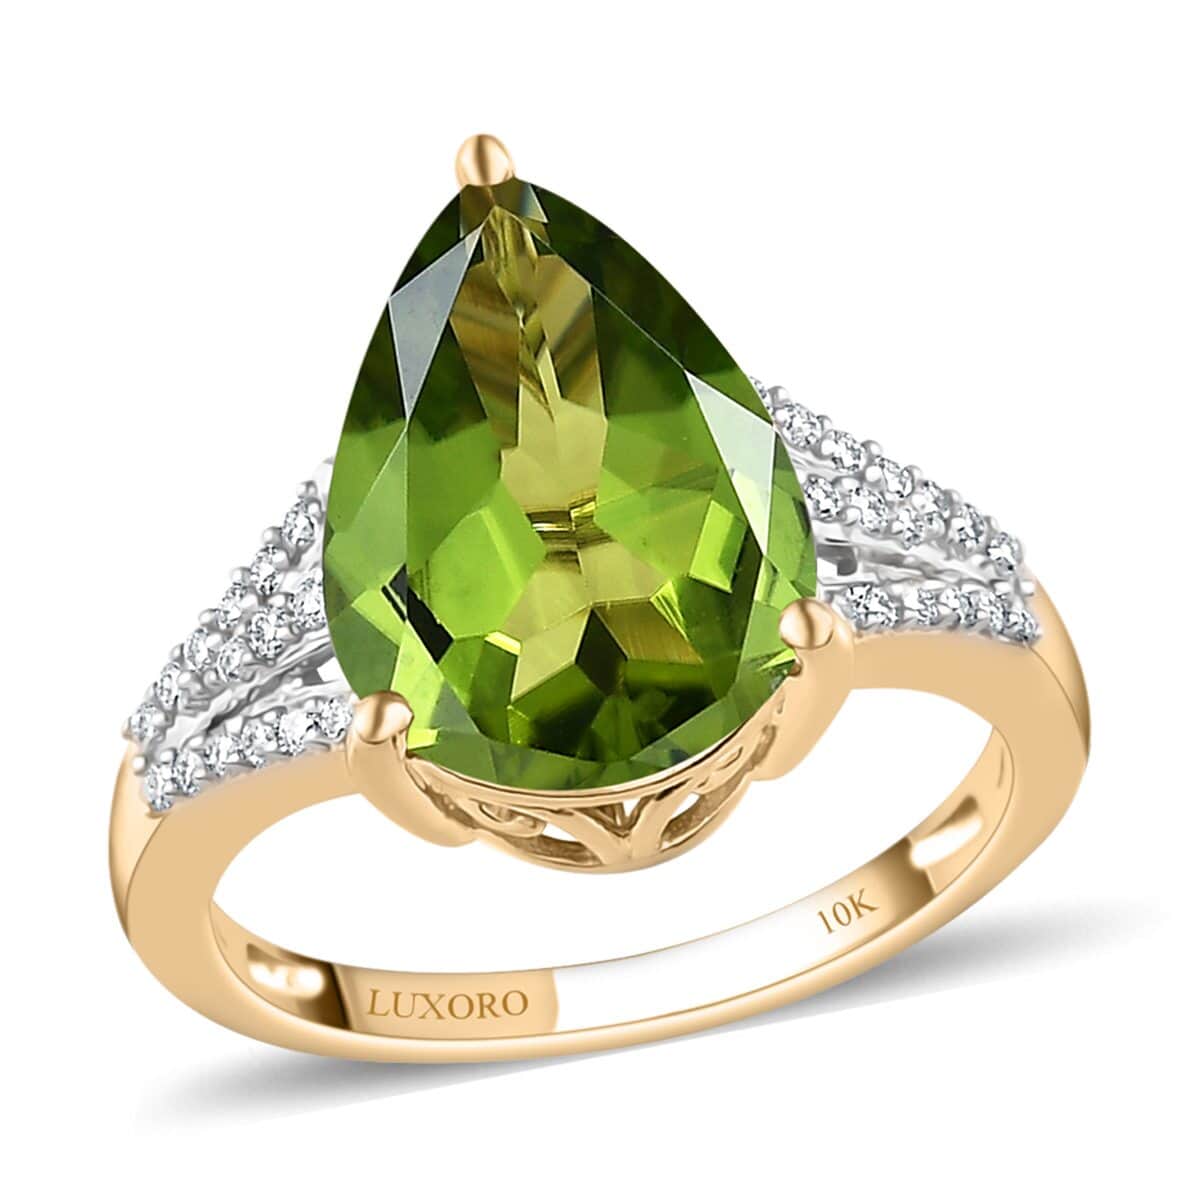 Luxoro 10K Yellow Gold Premium Peridot and Moissanite Ring (Size 7.0) 3.25 Grams 5.00 ctw image number 0